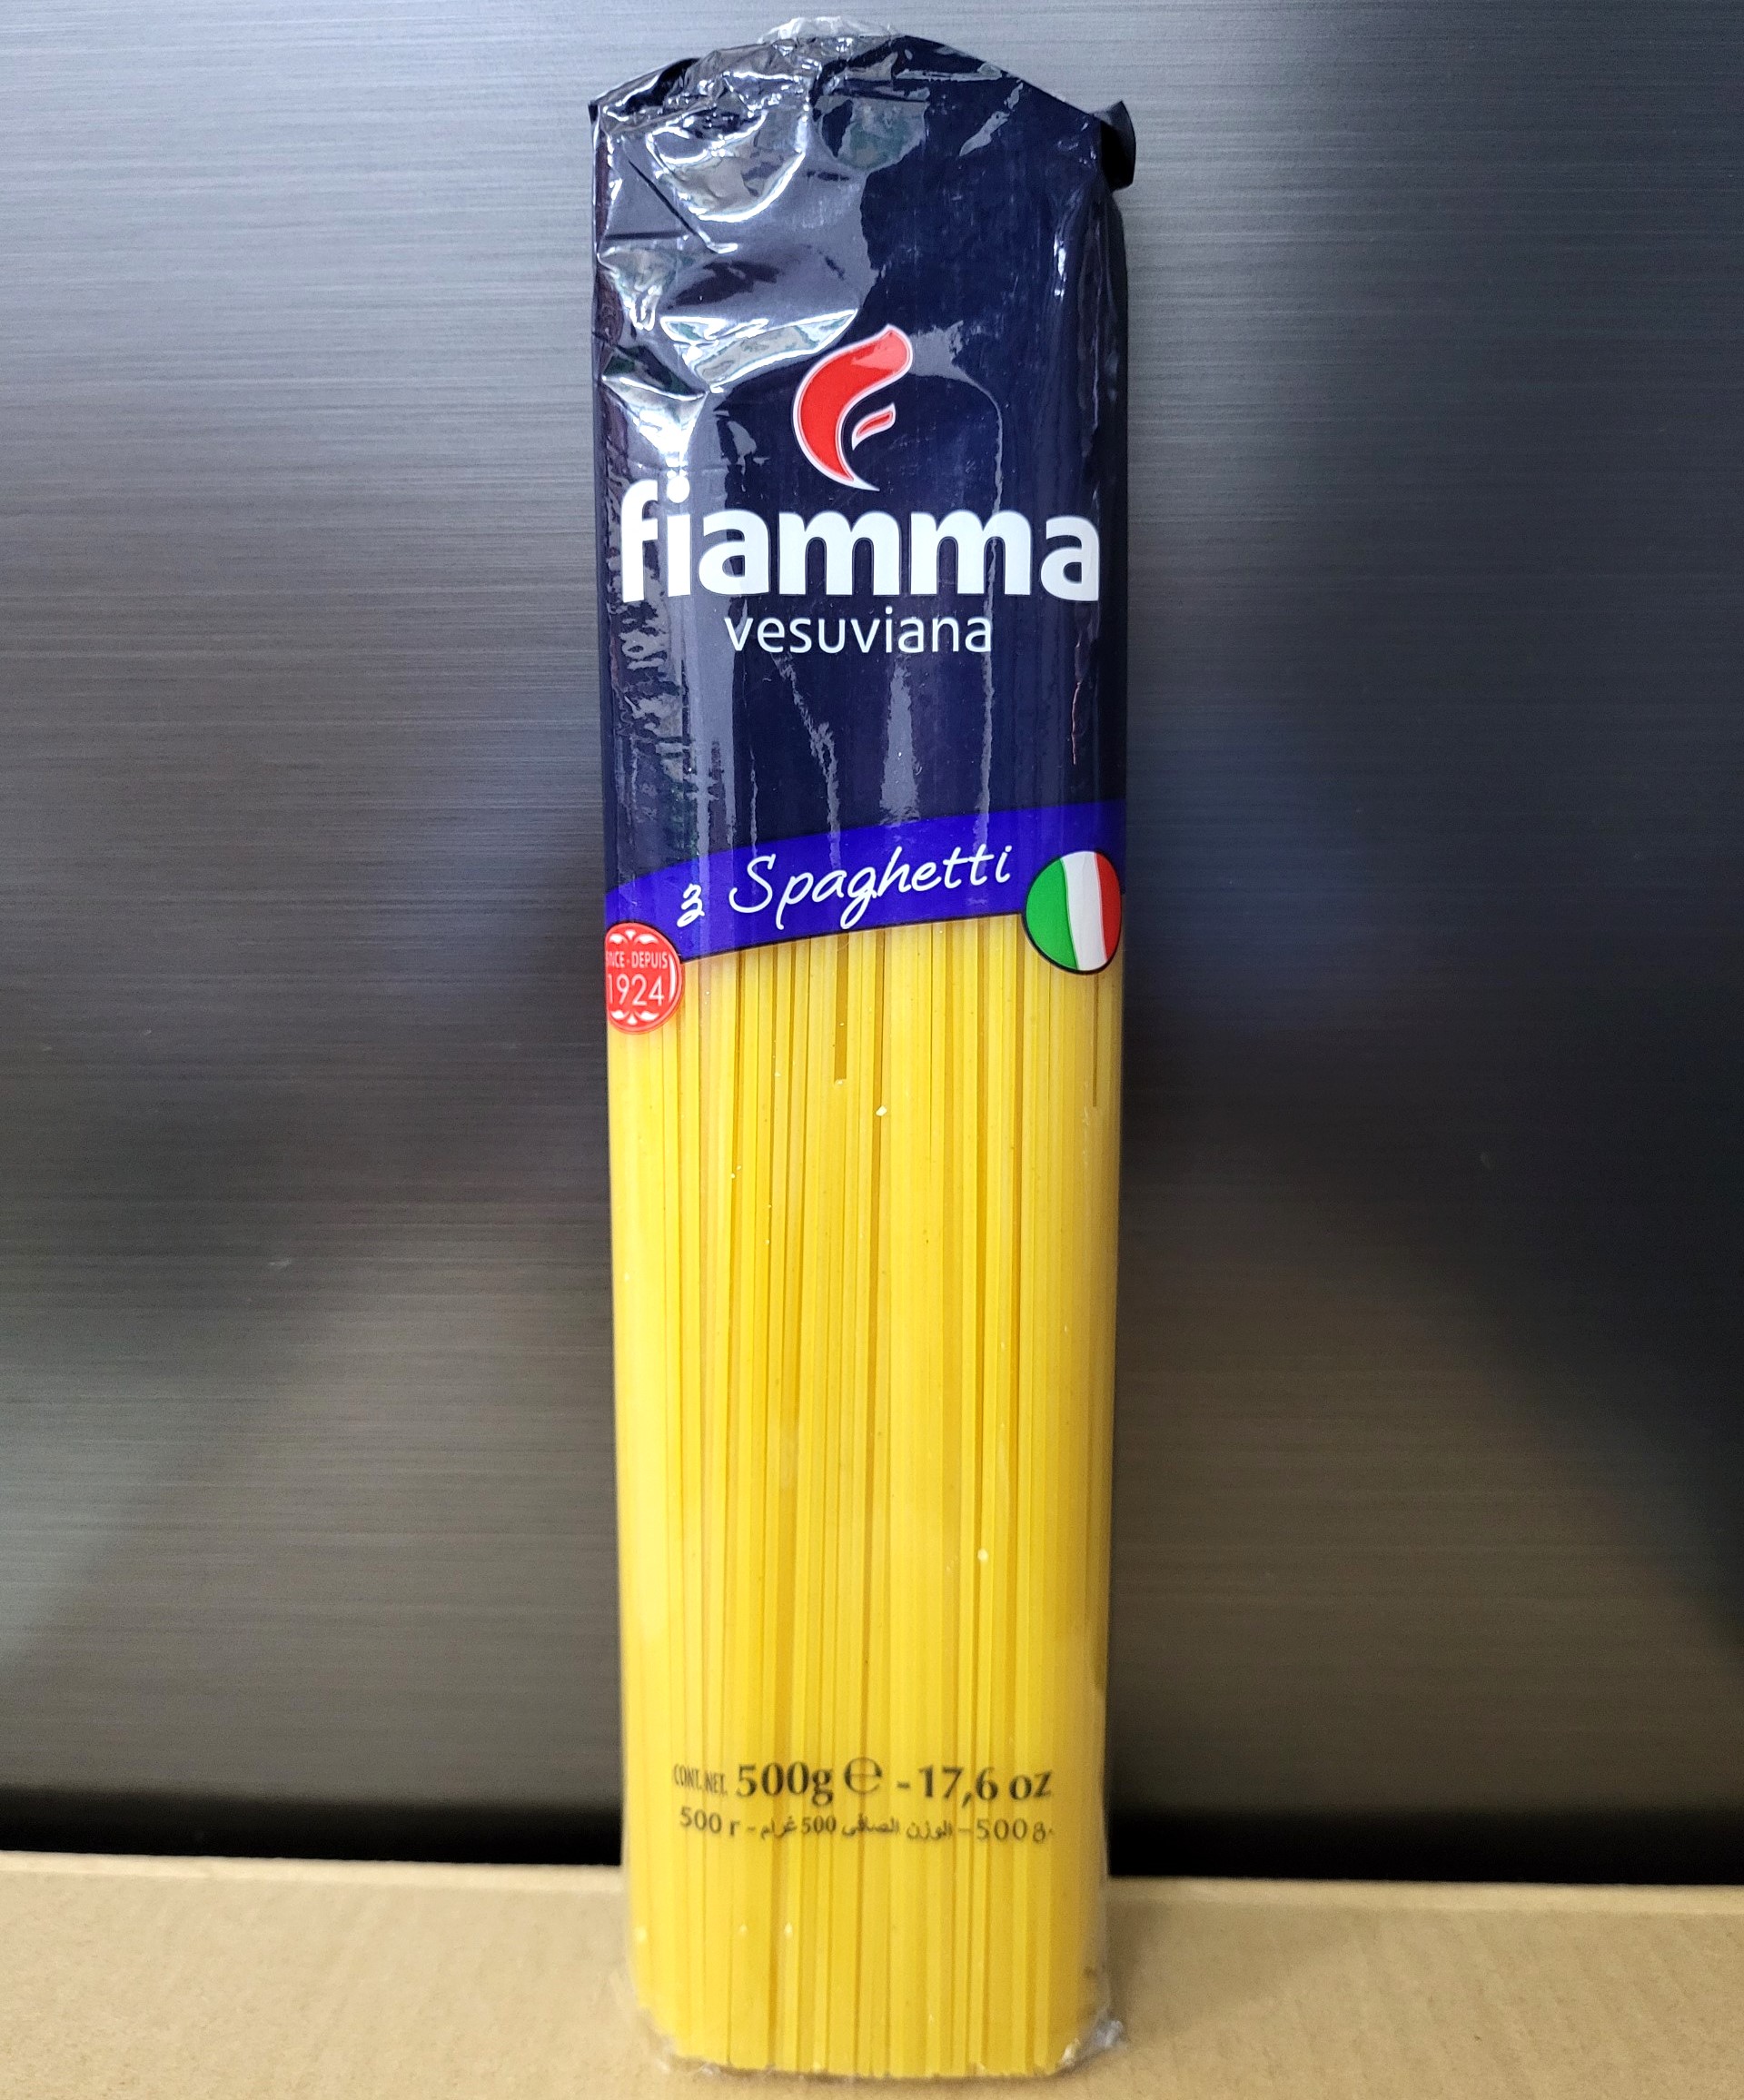 FIAMMA - gói 500g số 3 - MỲ Ý SỢI TRÒN Ý No 3 Spaghetti Pasta HALAL